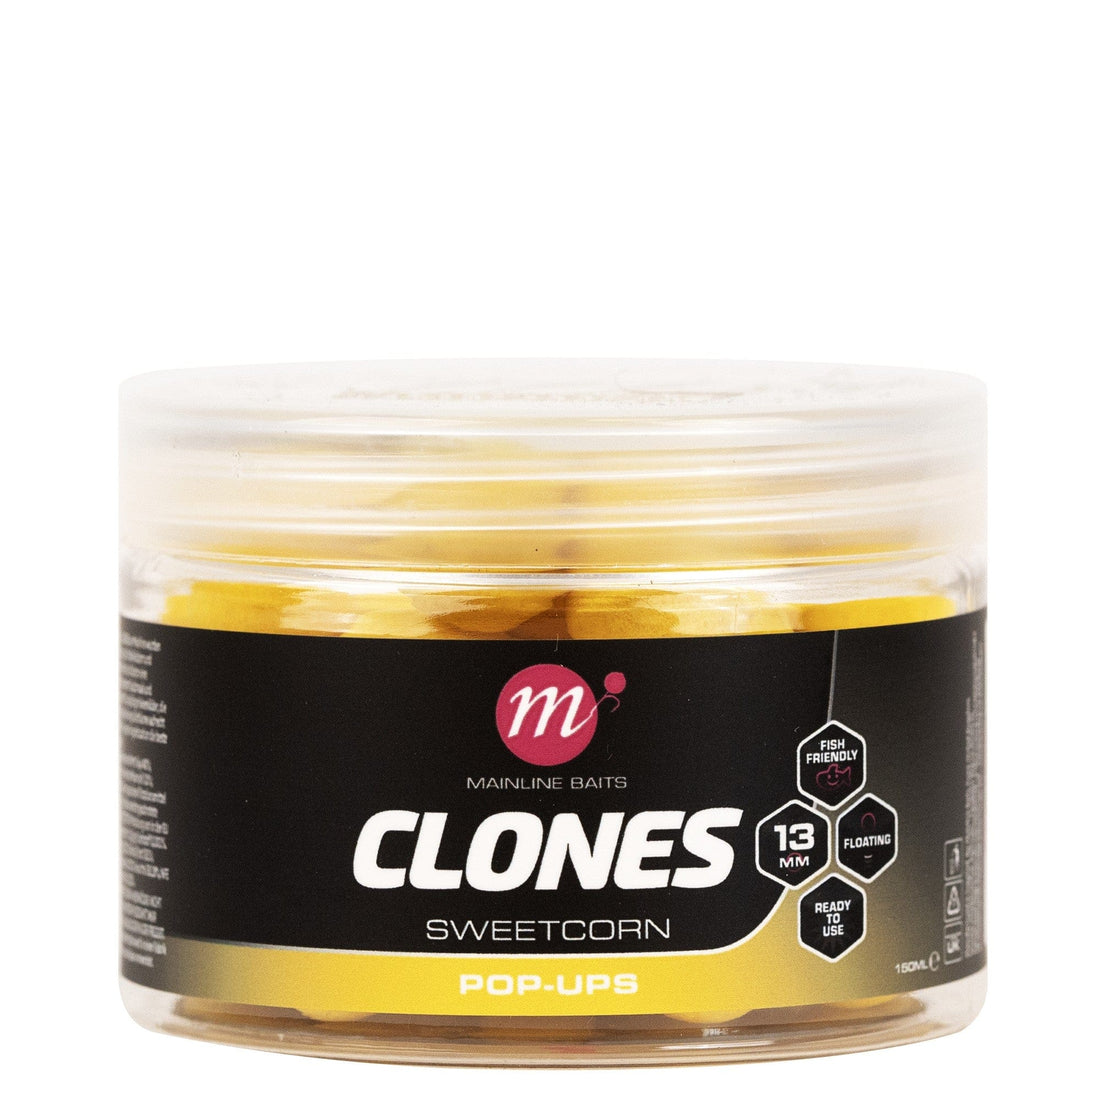 Mainline Clones Barrel Pop Ups 13mm Sweetcorn